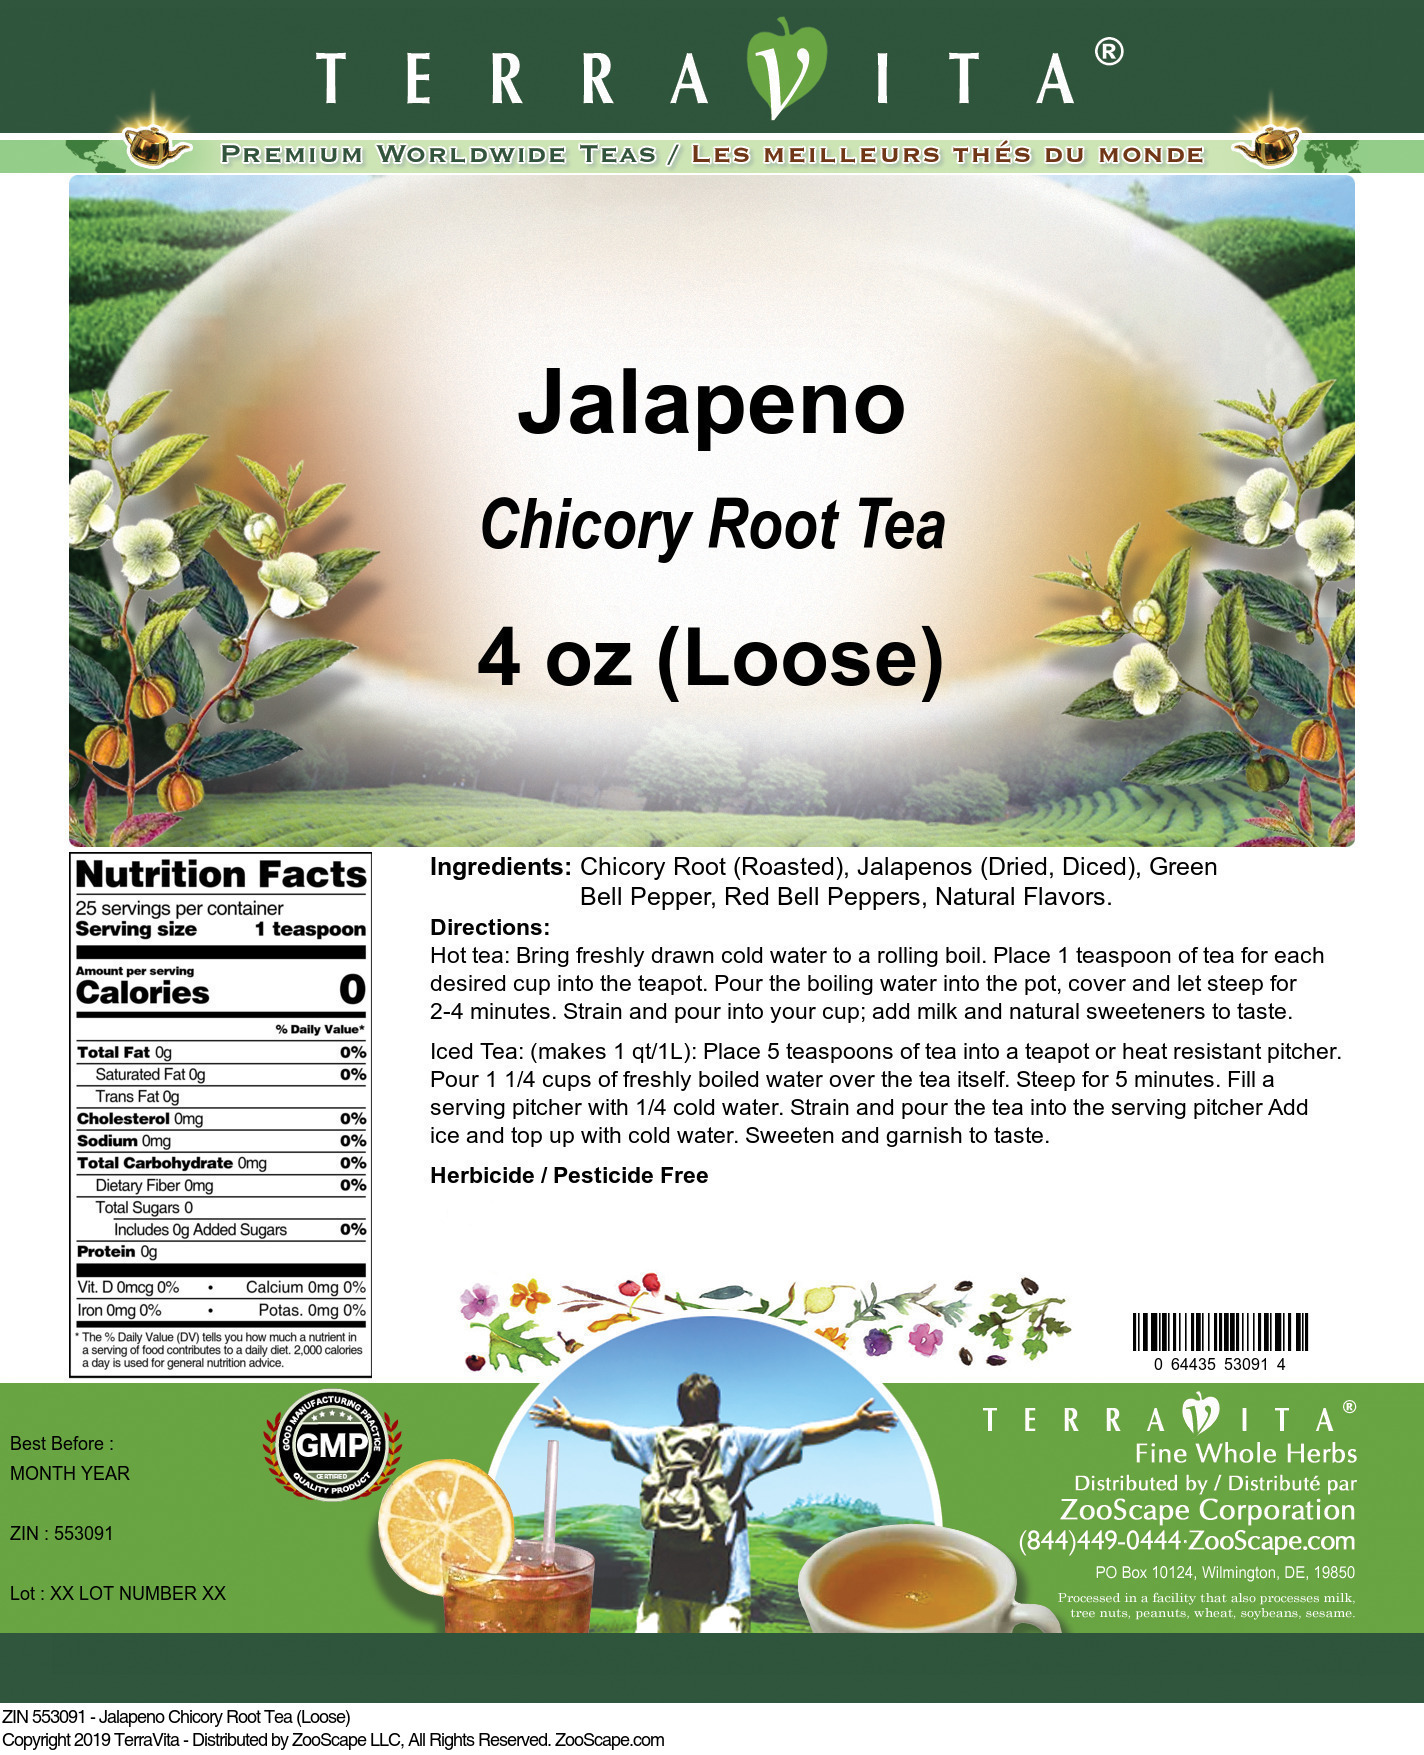 Jalapeno Chicory Root Tea (Loose) - Label